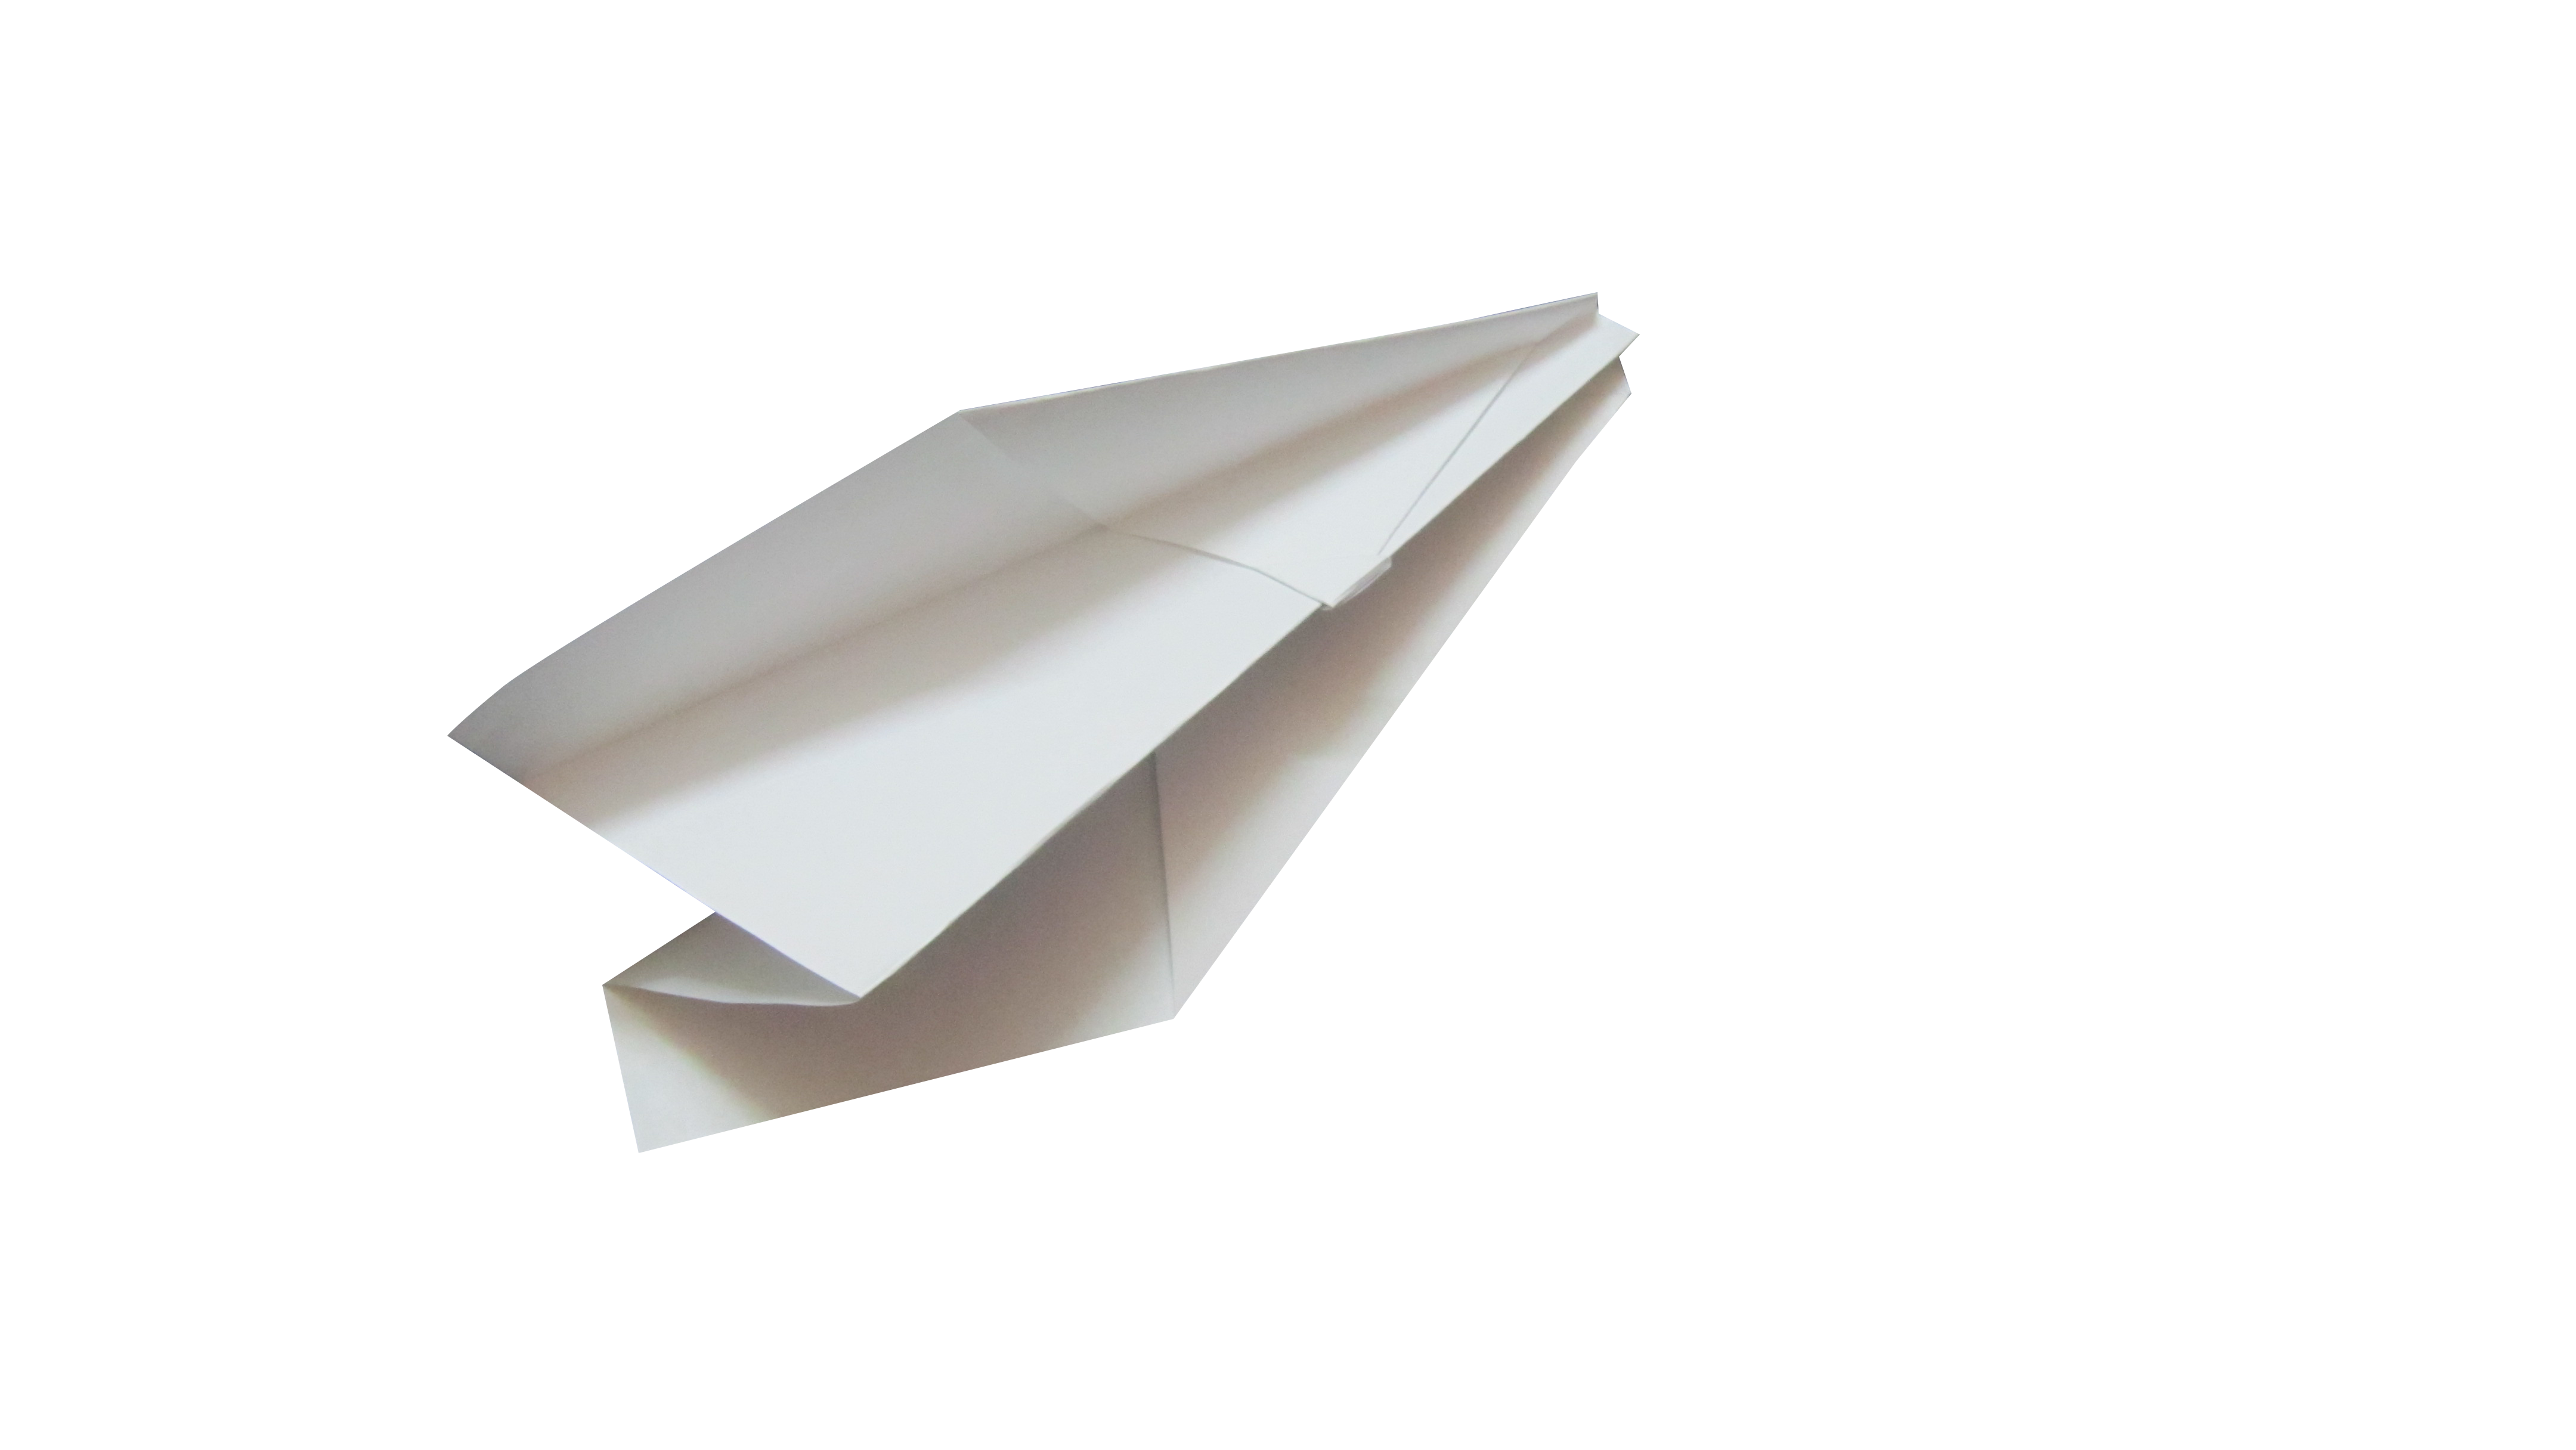 A+ paper writing plane